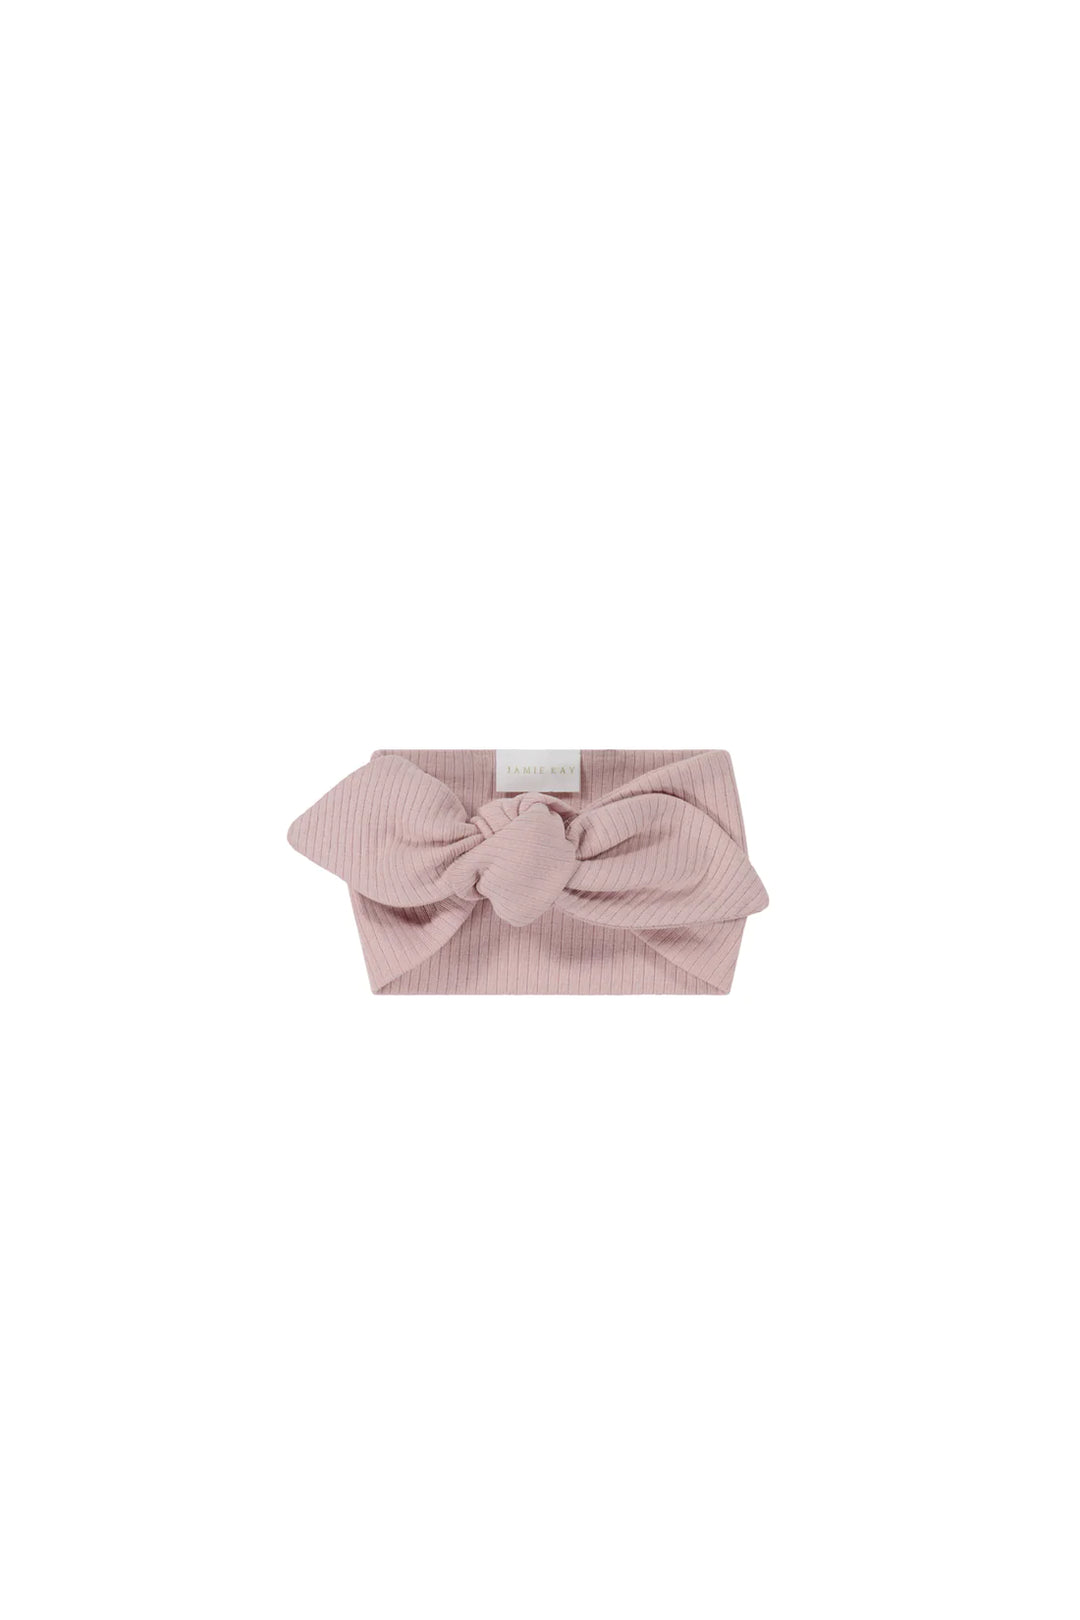 Organic Cotton Modal Headband - Powder Pink - JL & CO. boutique 